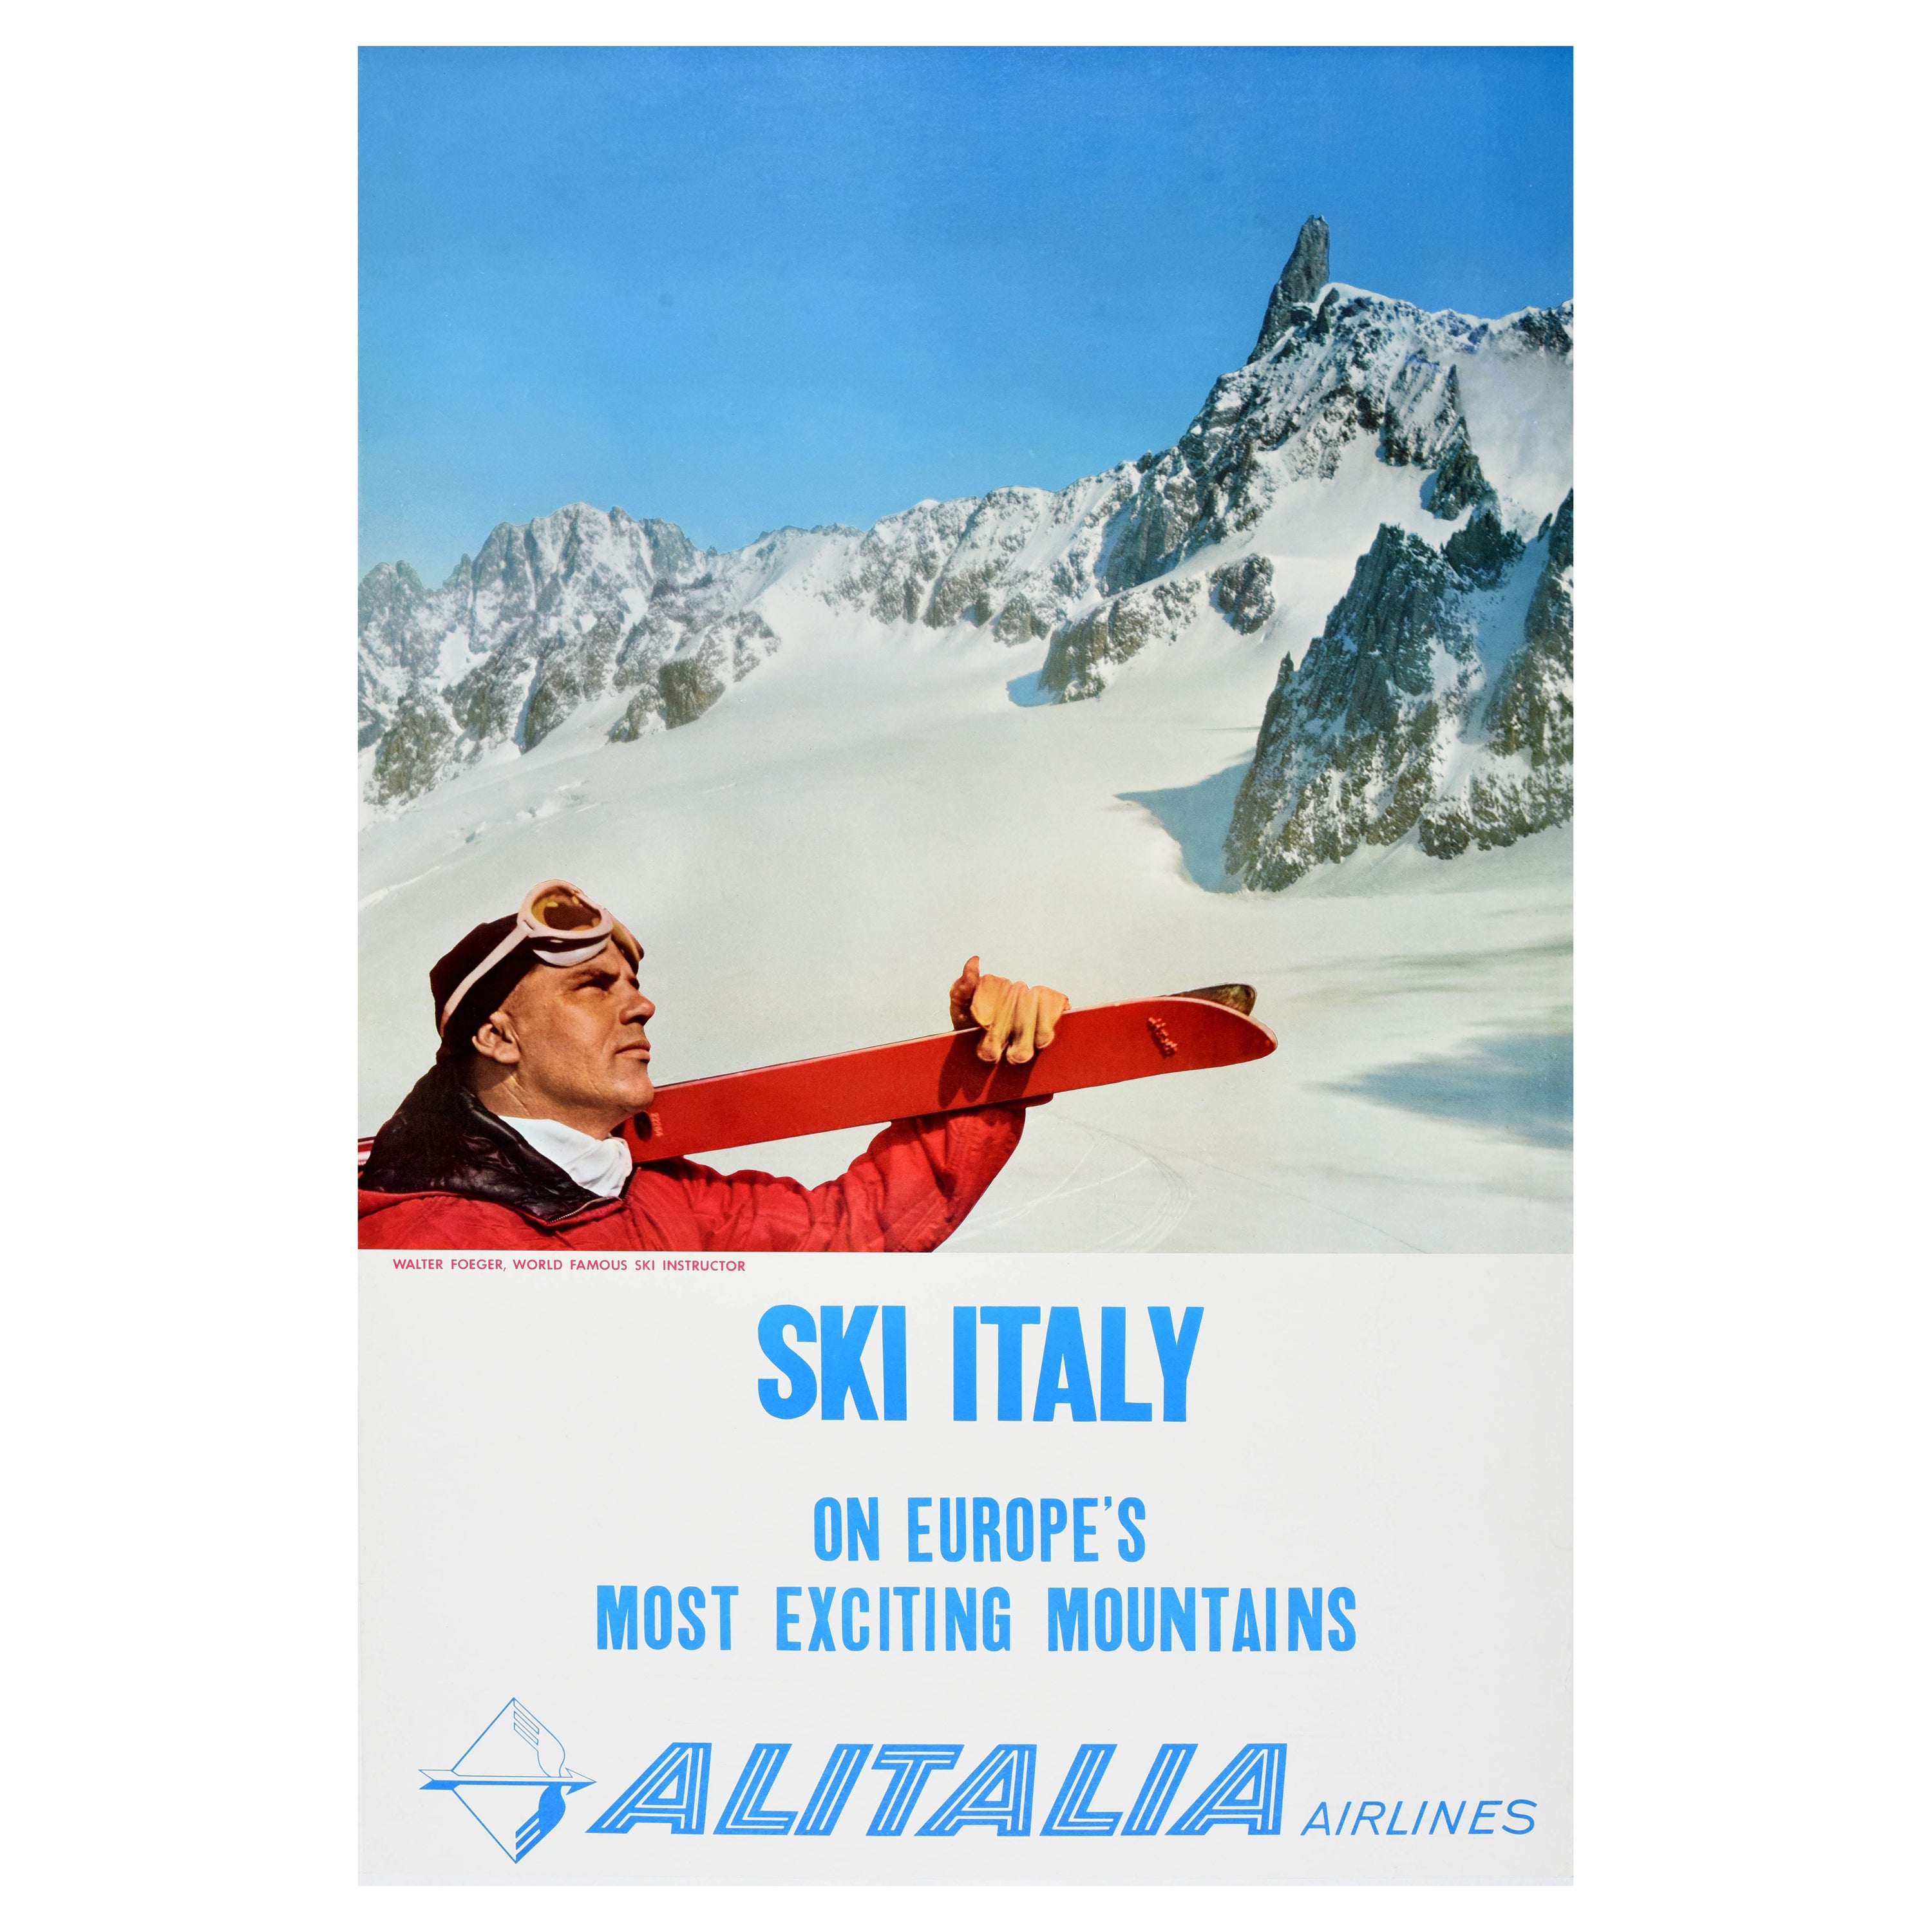 Affiche rétro originale de ski, Ski, Italie, Alitalia Airlines, Walter Foeger